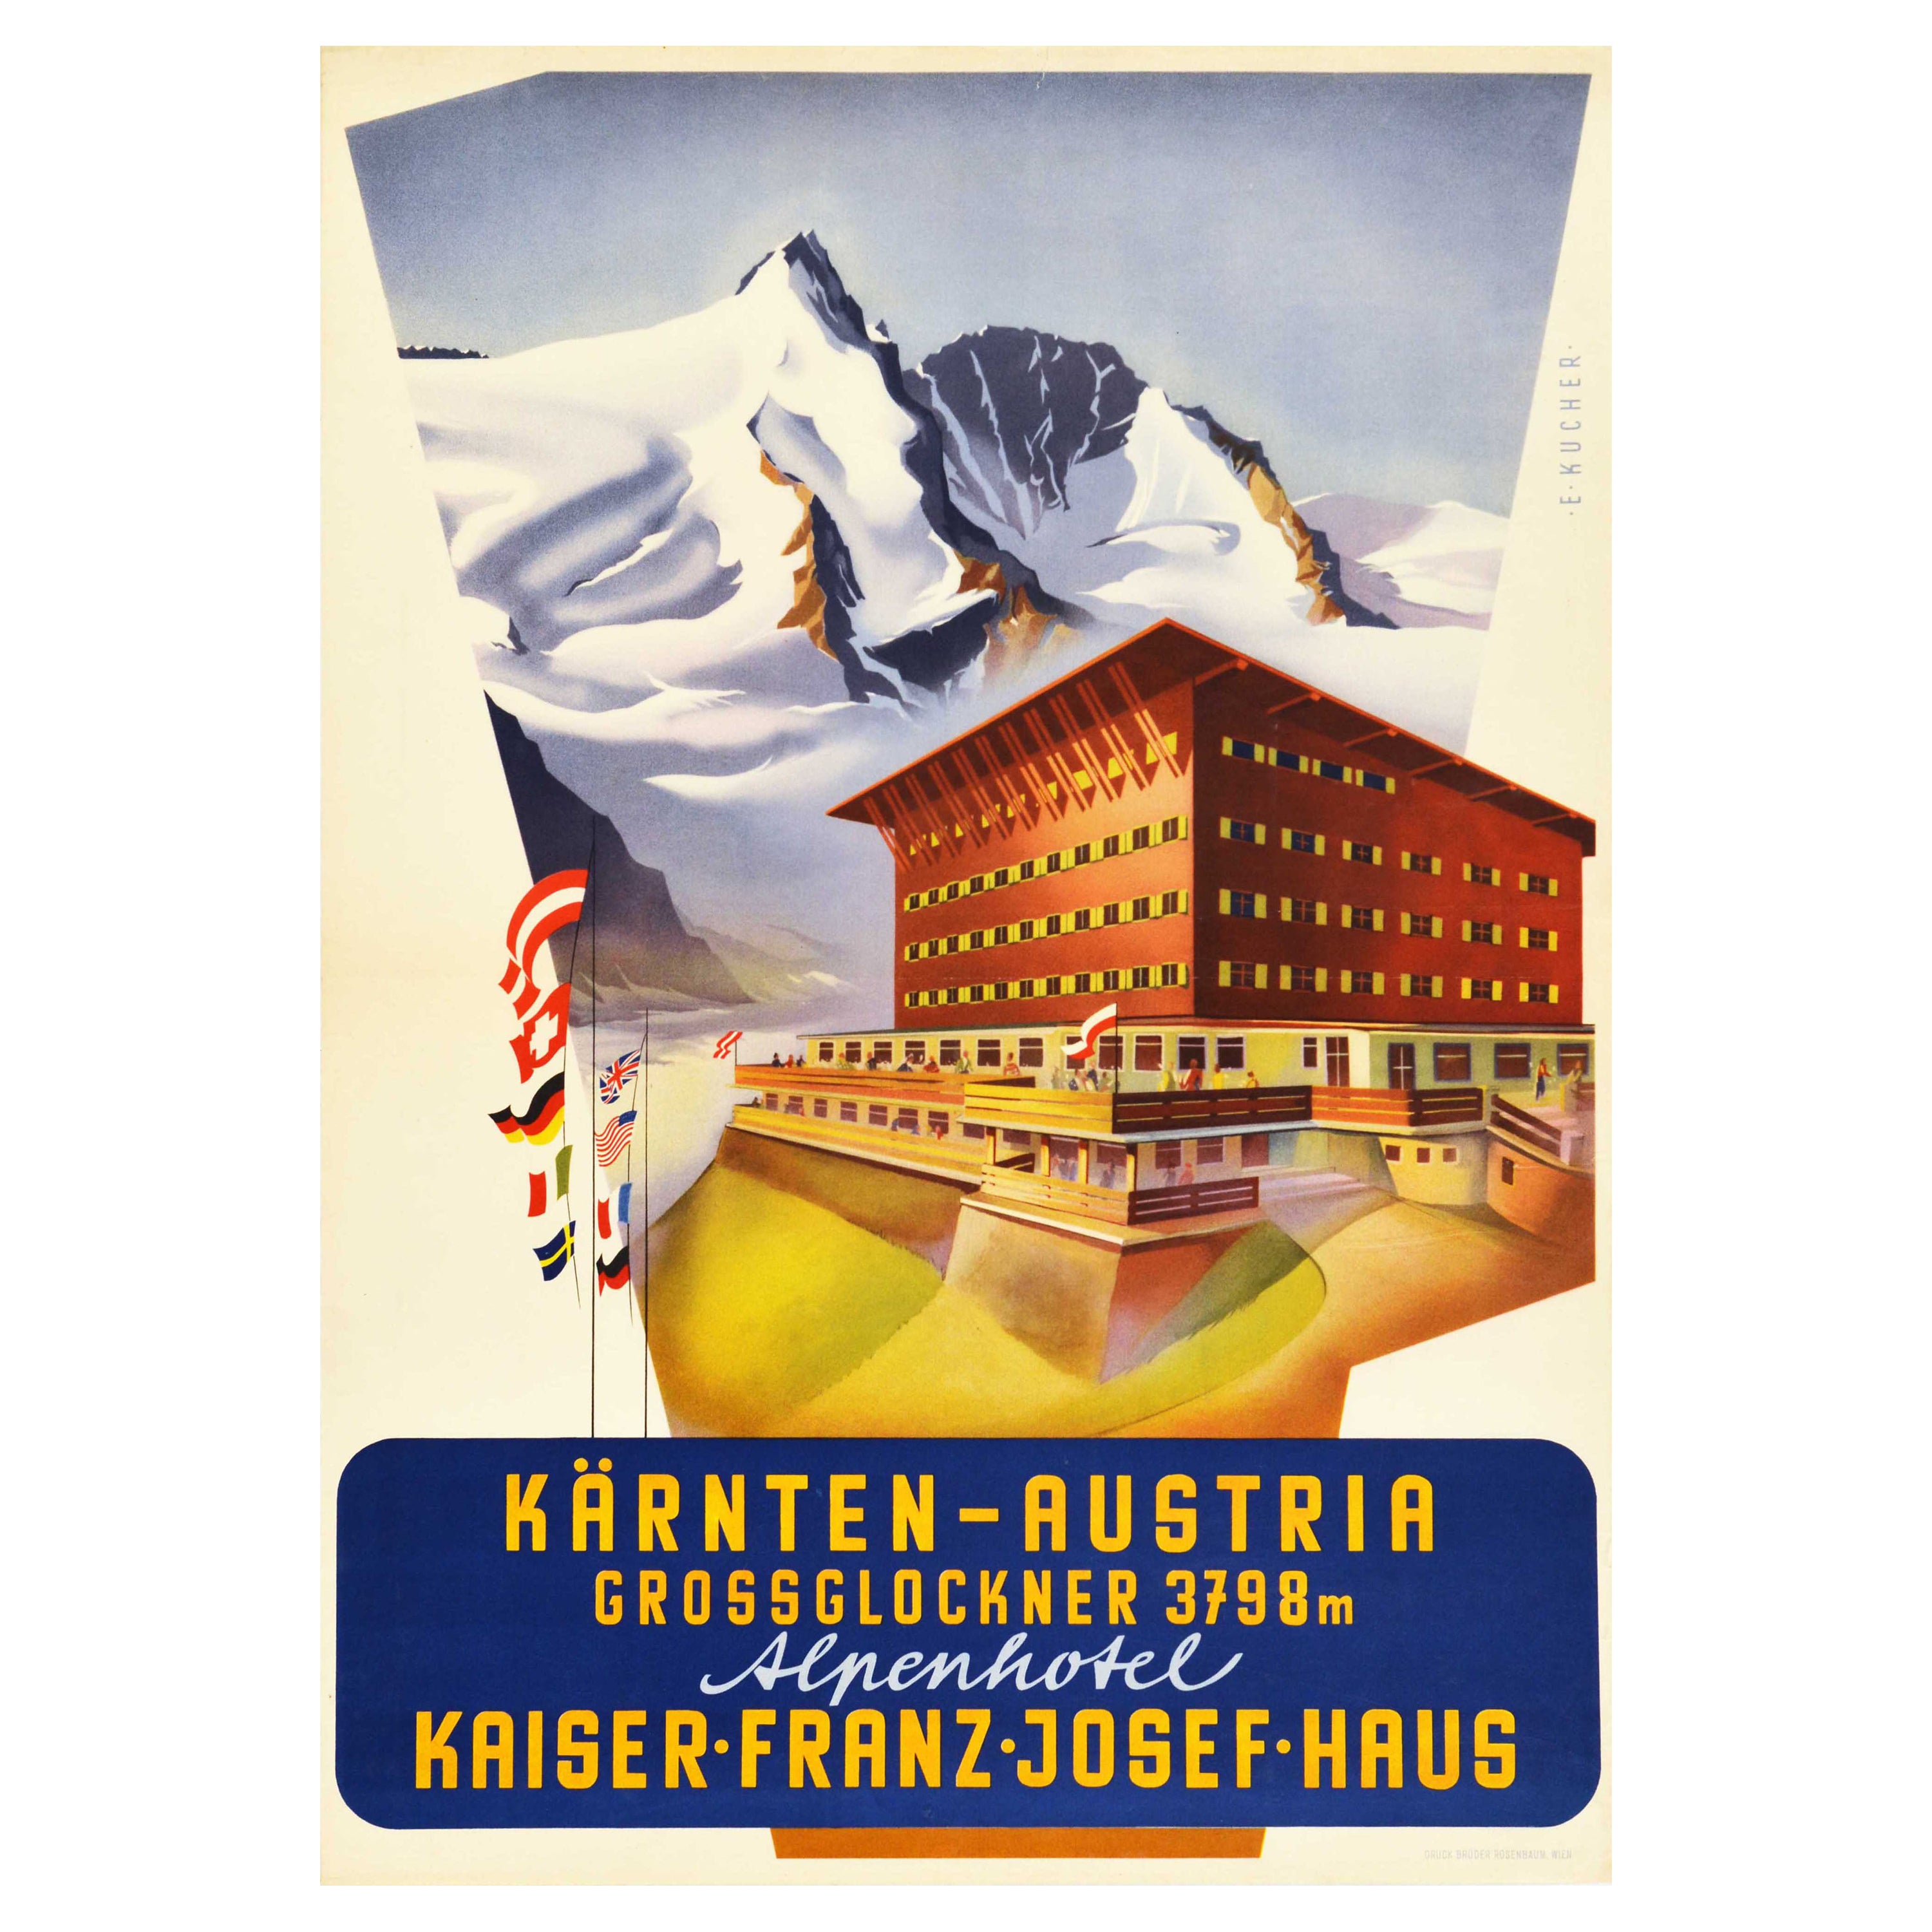 Original Vintage Poster Karnten Austria Grossglockner Carinthia Mountain Glacier For Sale